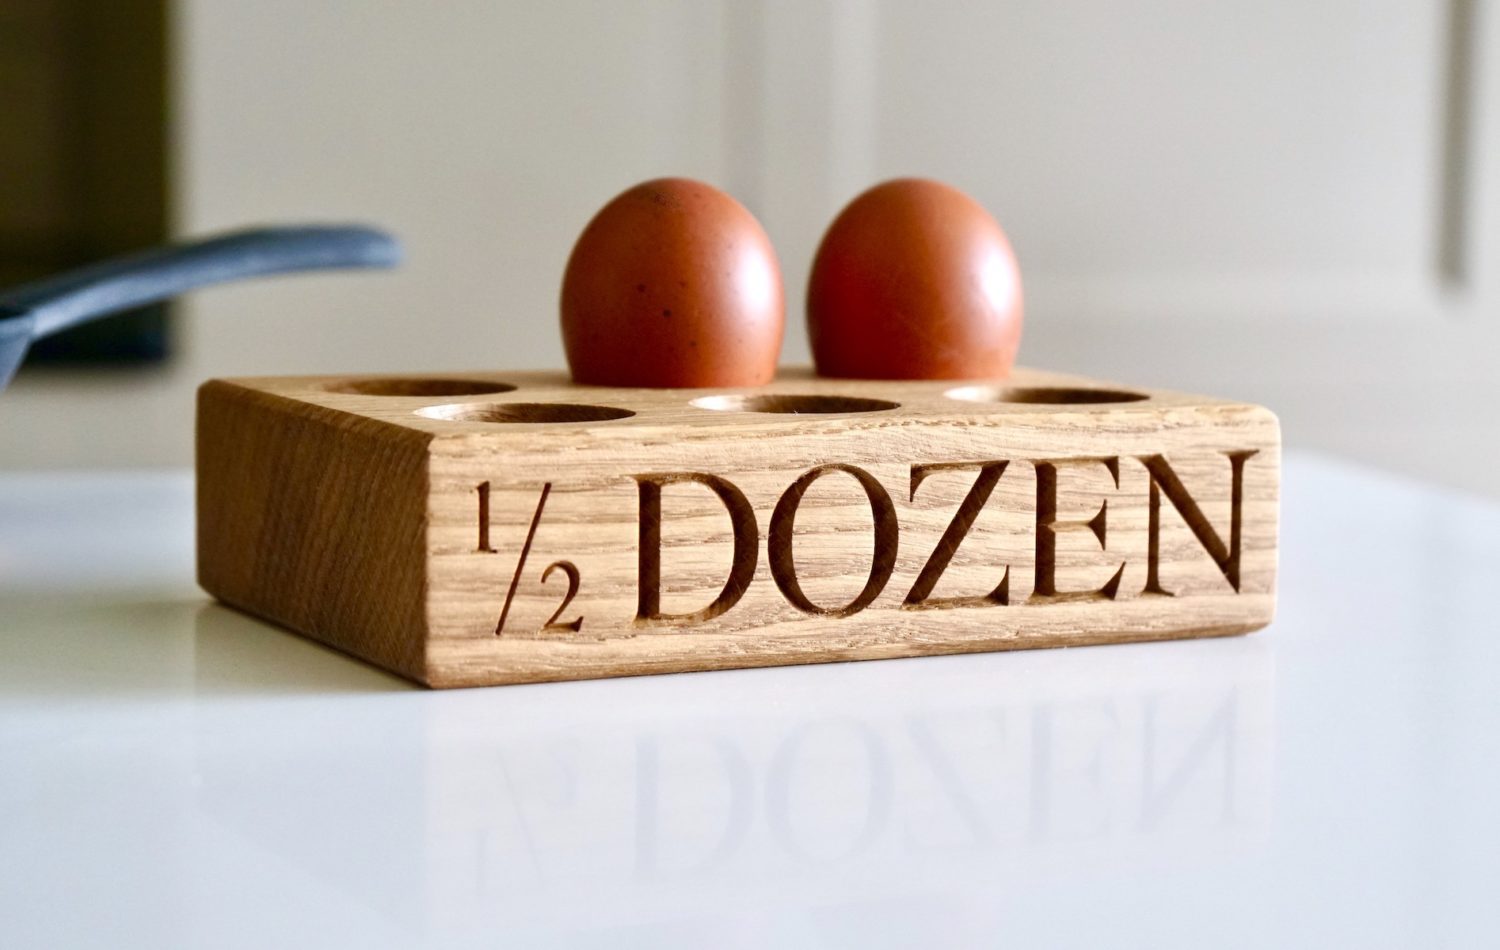 personalised-oak-egg-rack